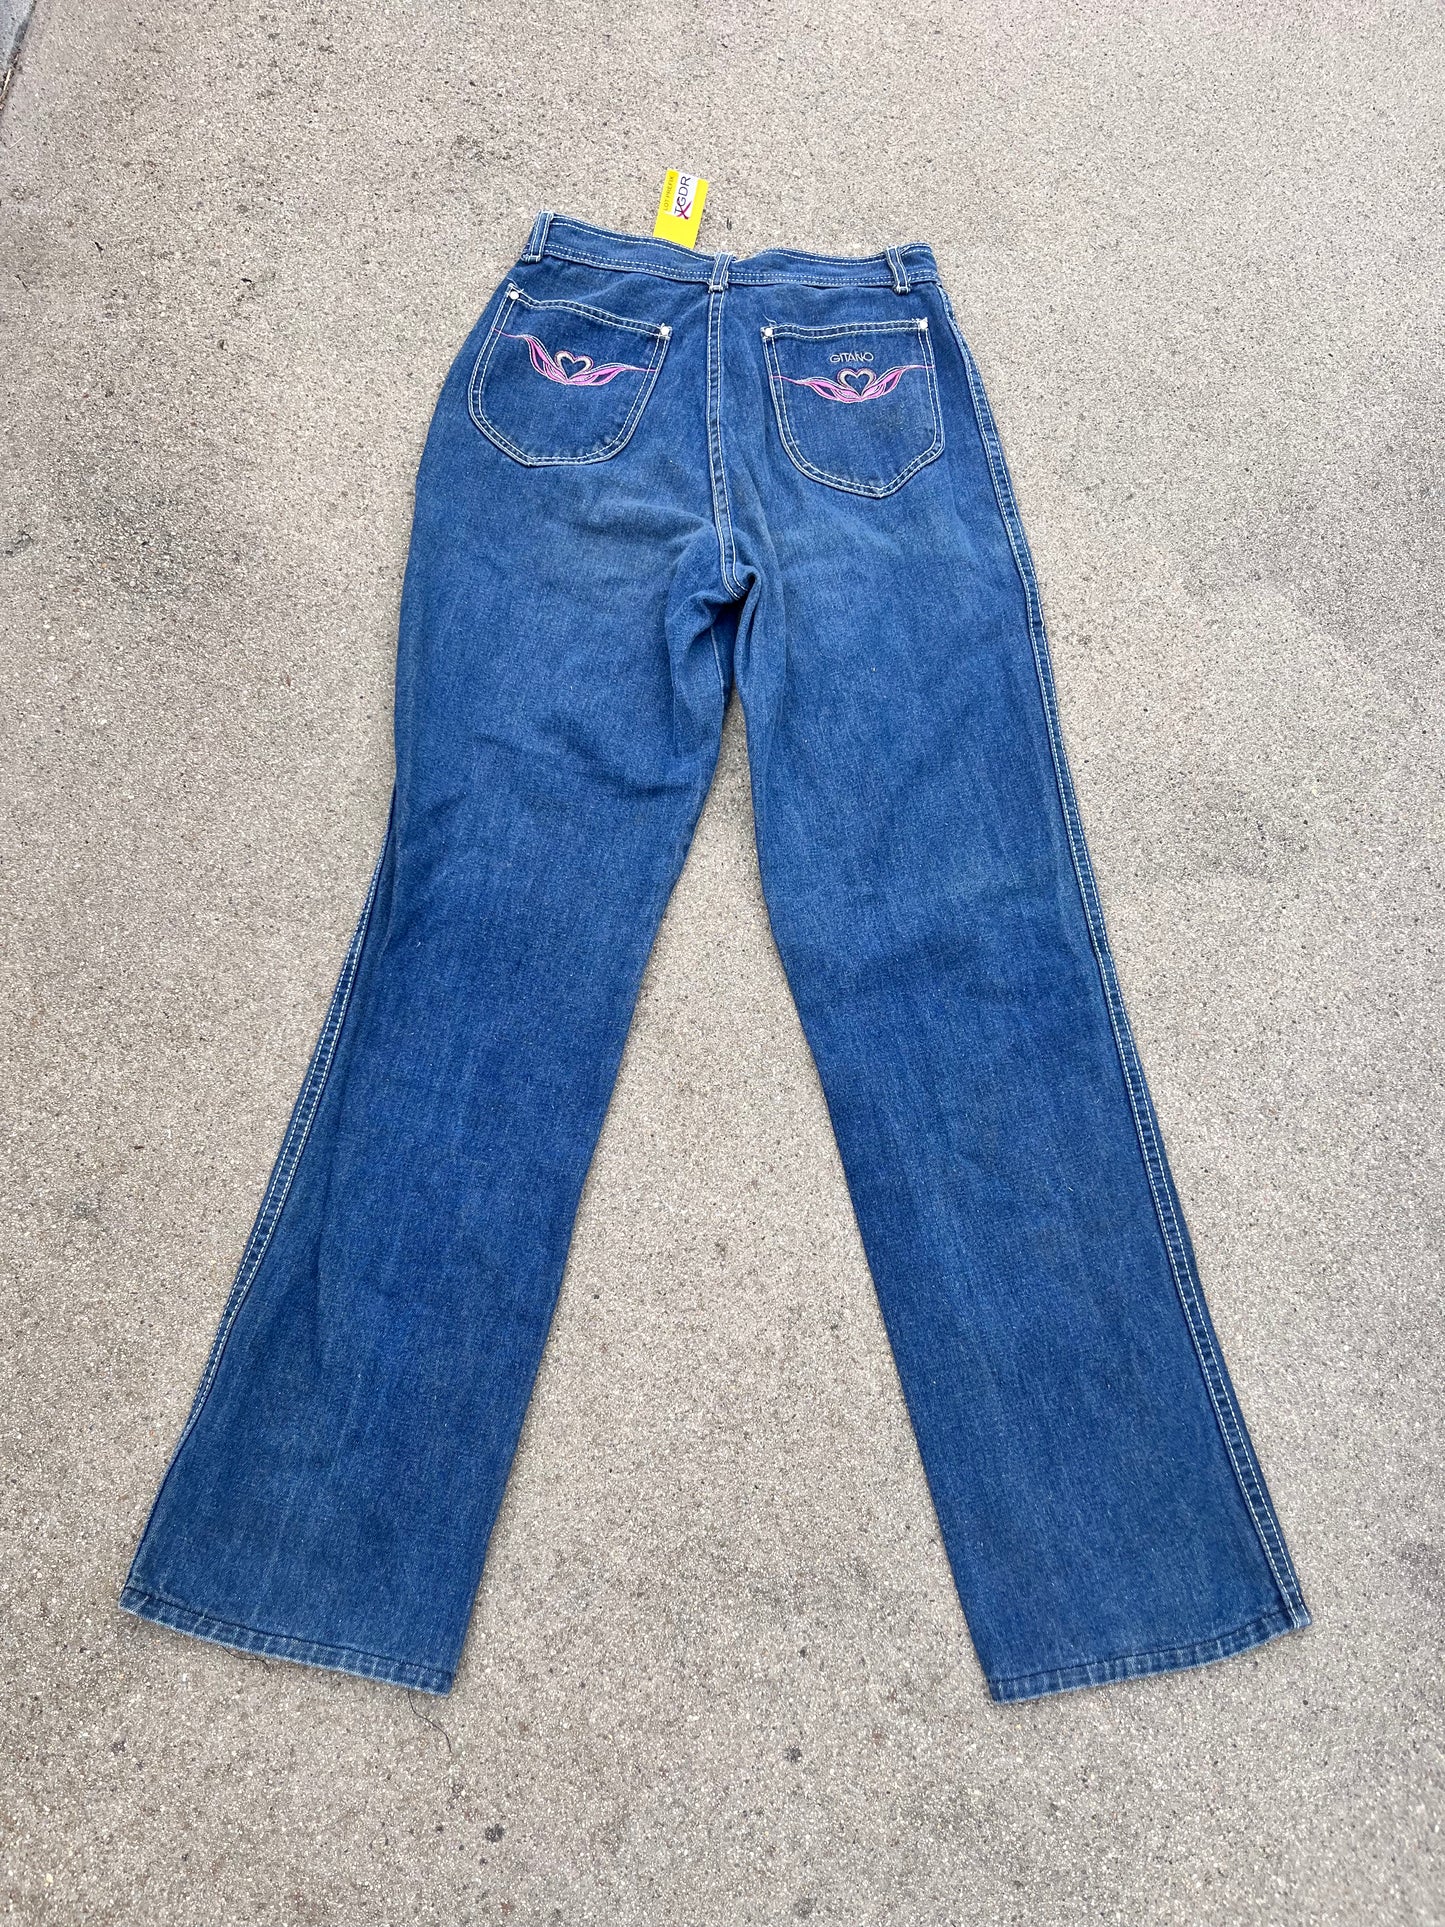 THE GET DOWN: Women Vintage 1970s Denim Jeans (28)